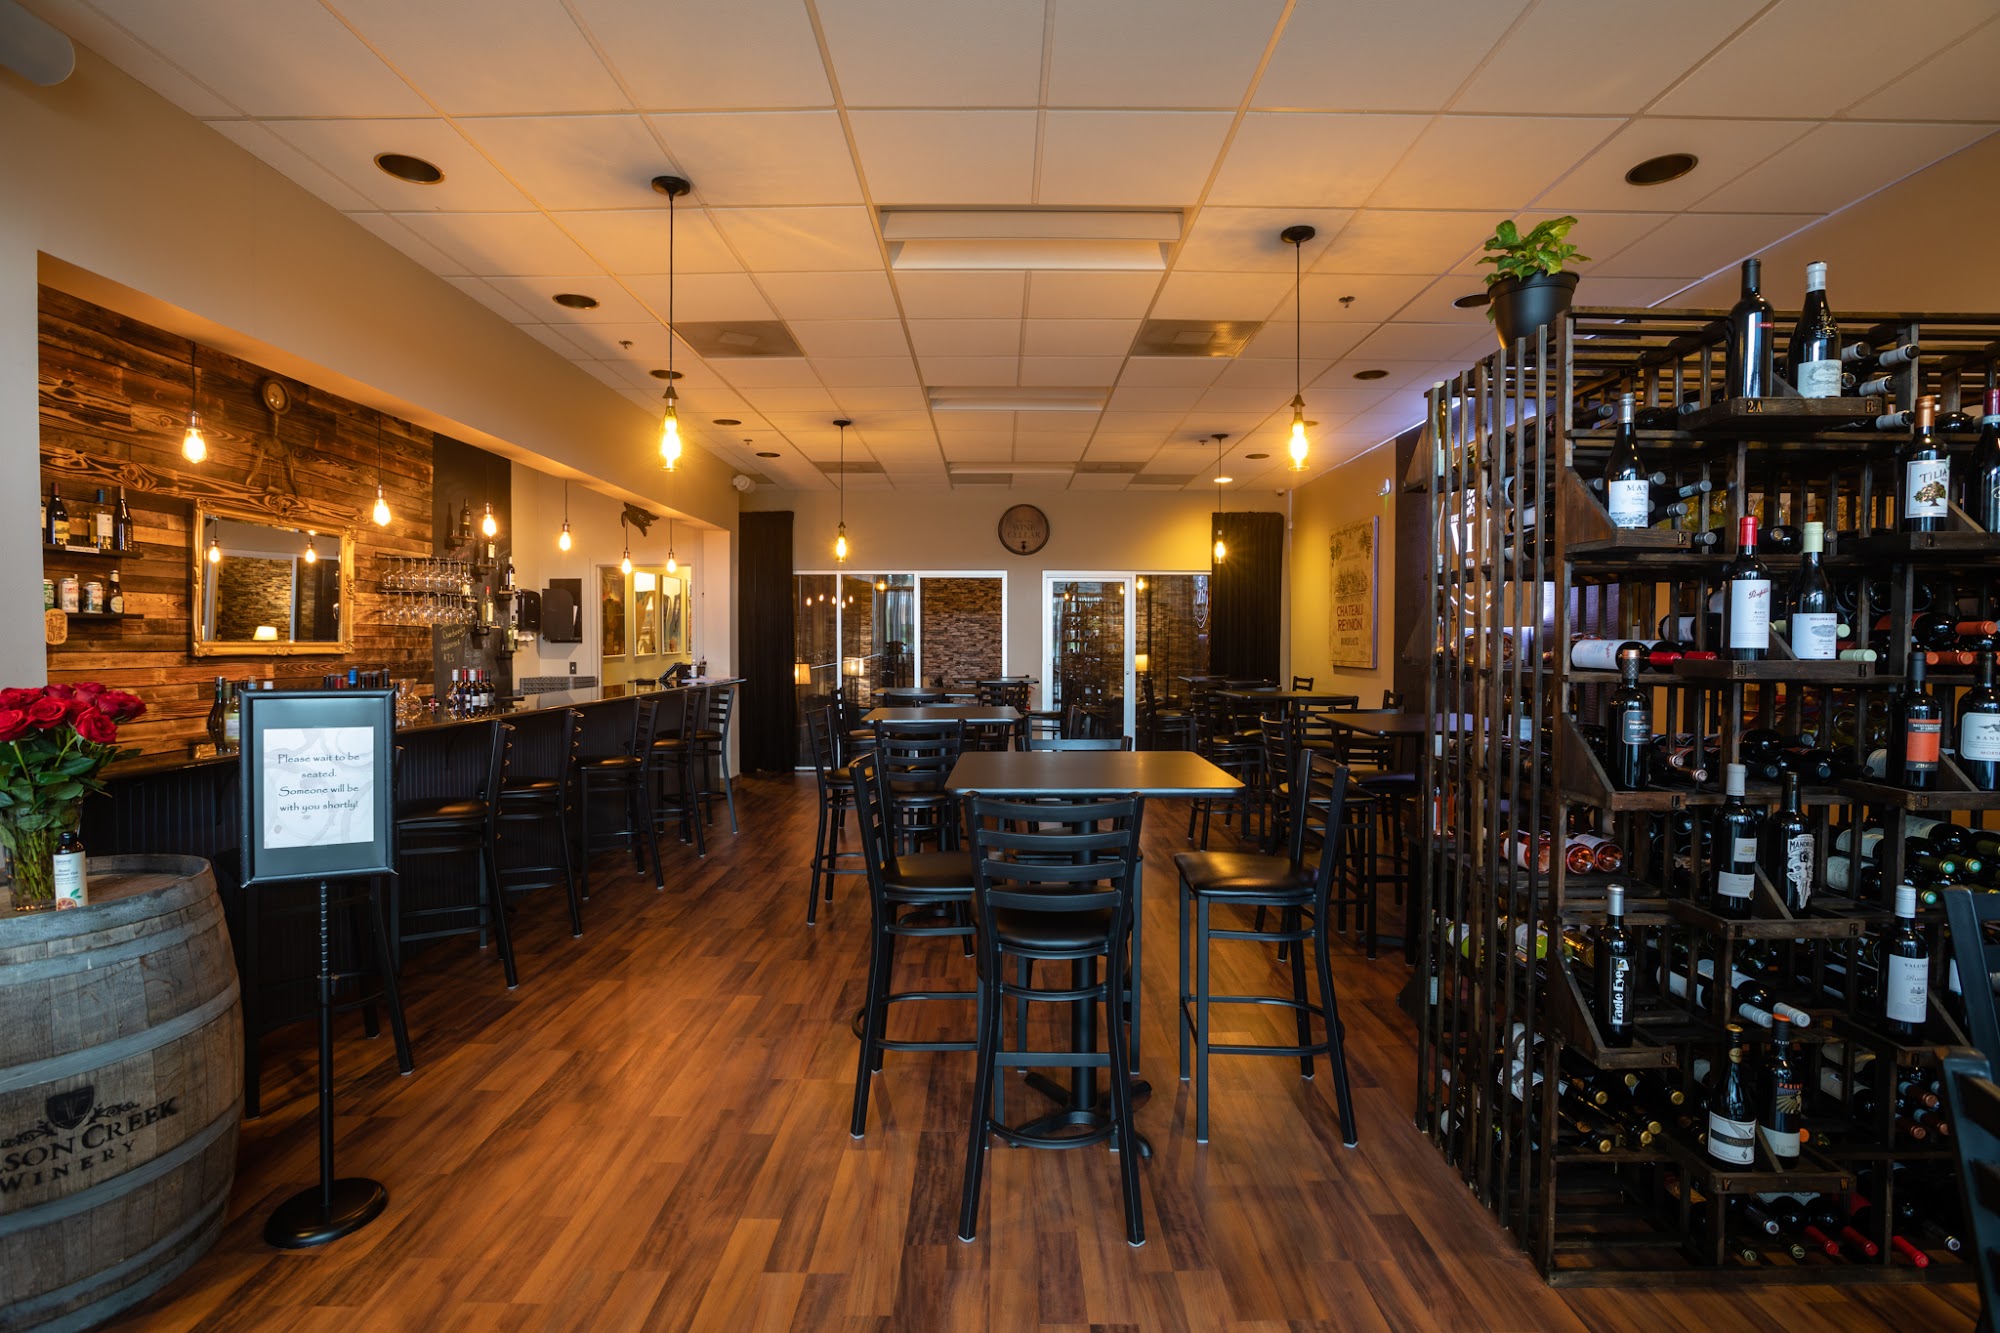 The Vine Wine Bar, Bistro & Shoppe